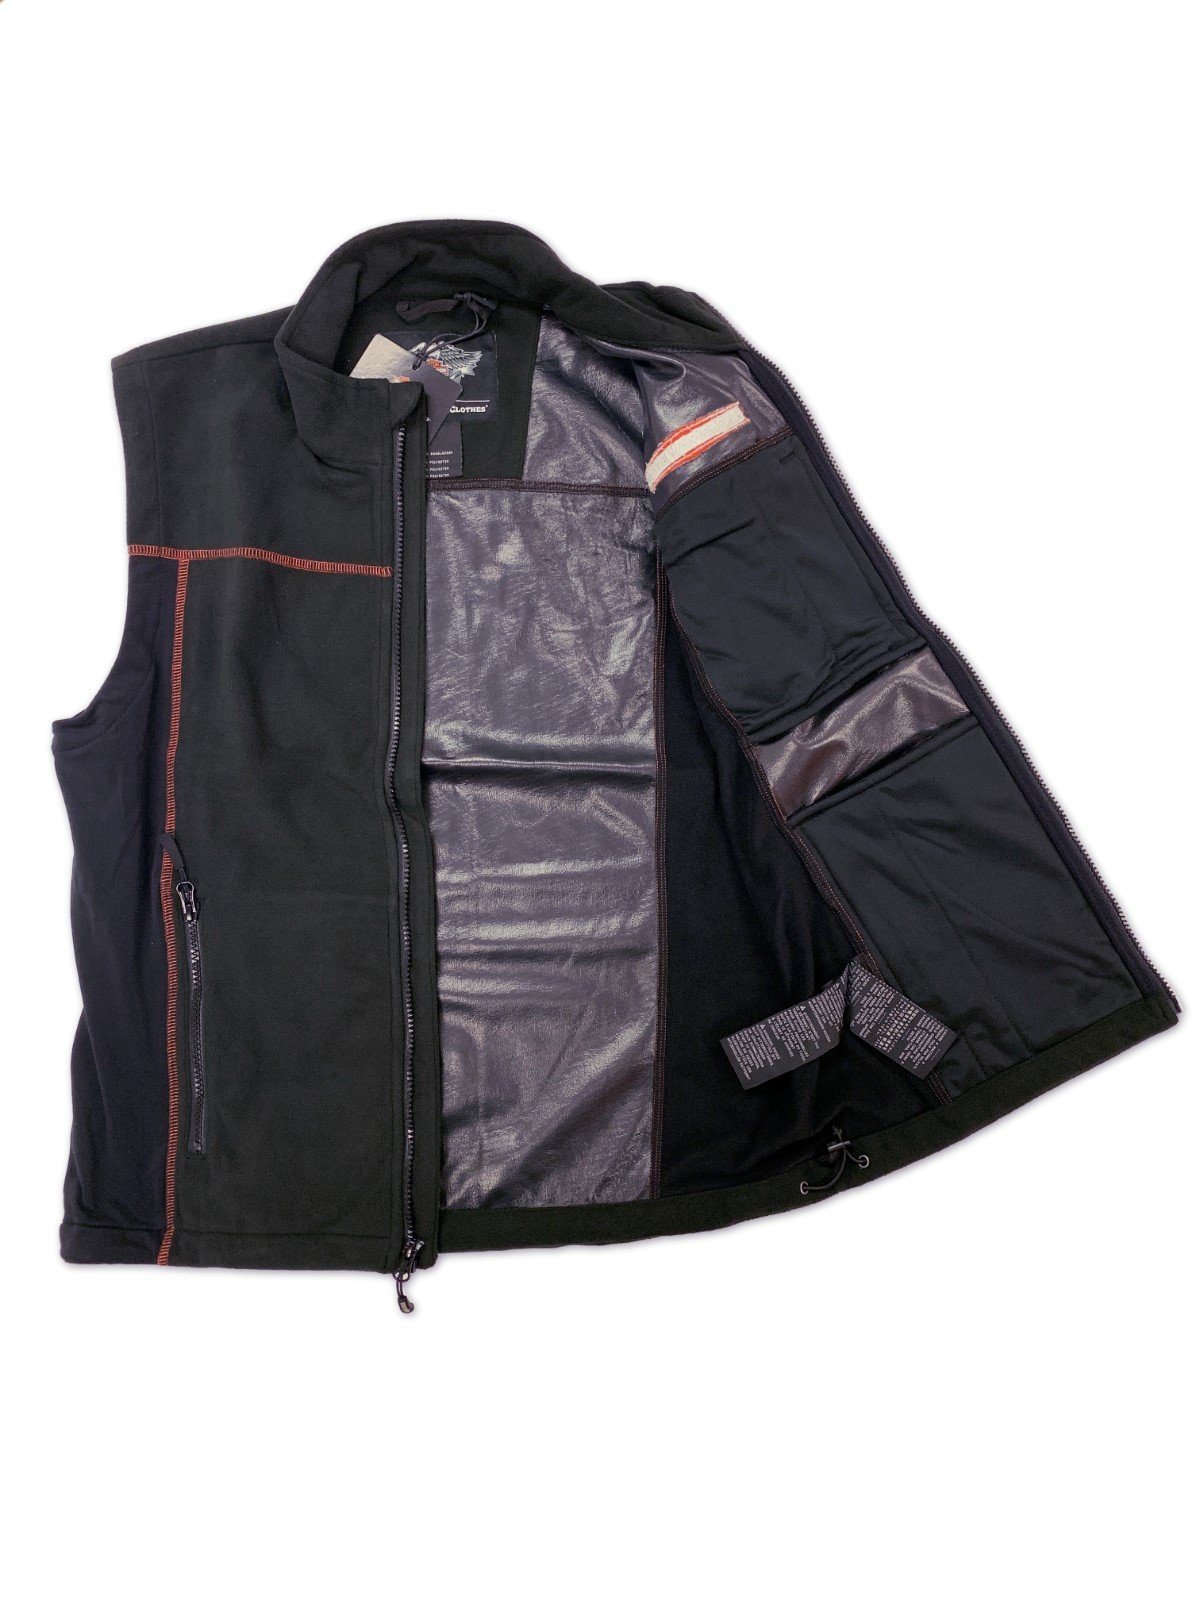 Harley-Davidson™ Men's Fleece Mid-Layer Vest Windproof, Black. 98567-16VM